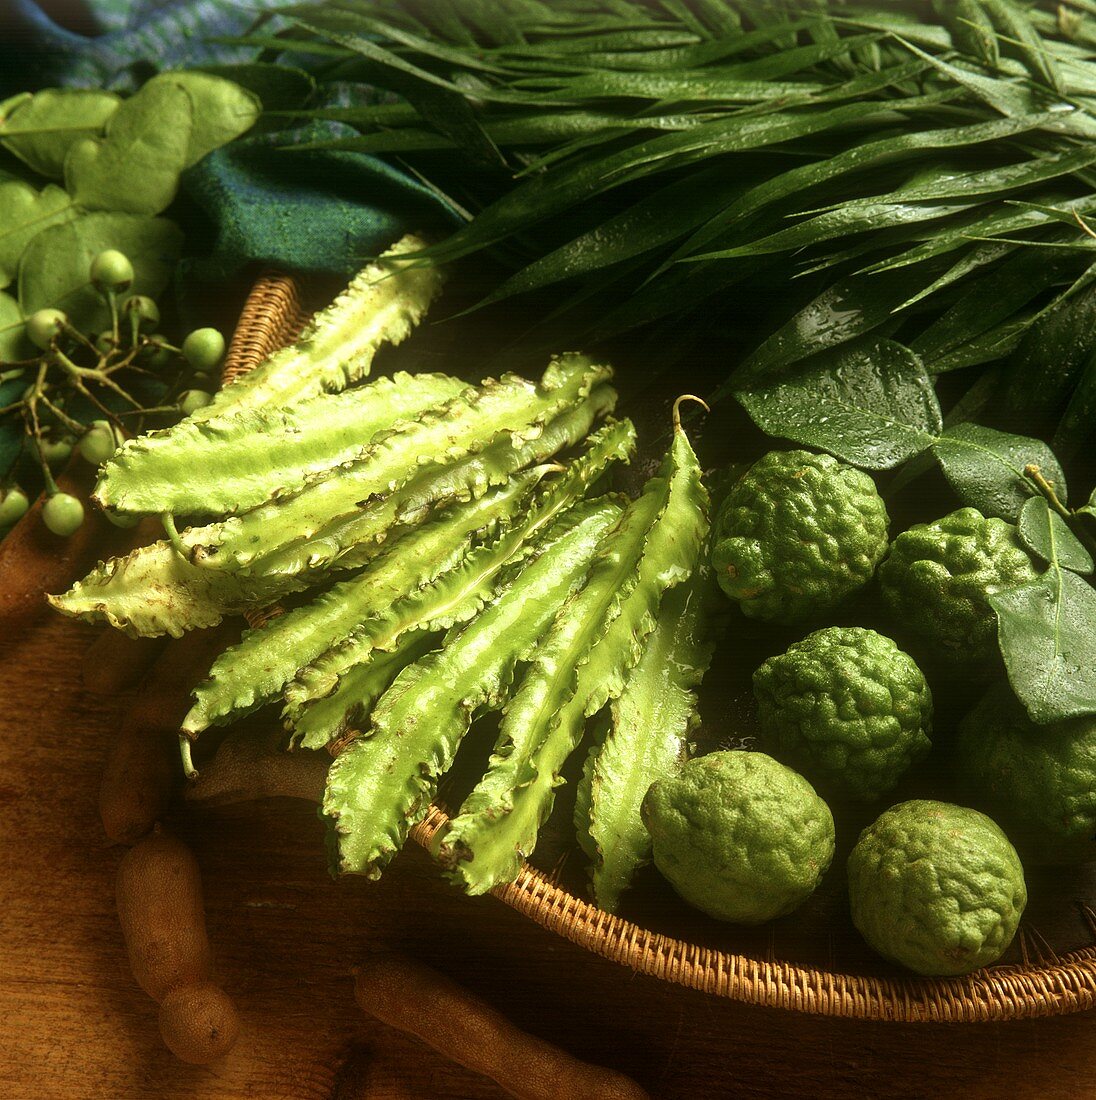 Asparagus peas and kafir limes in a basket